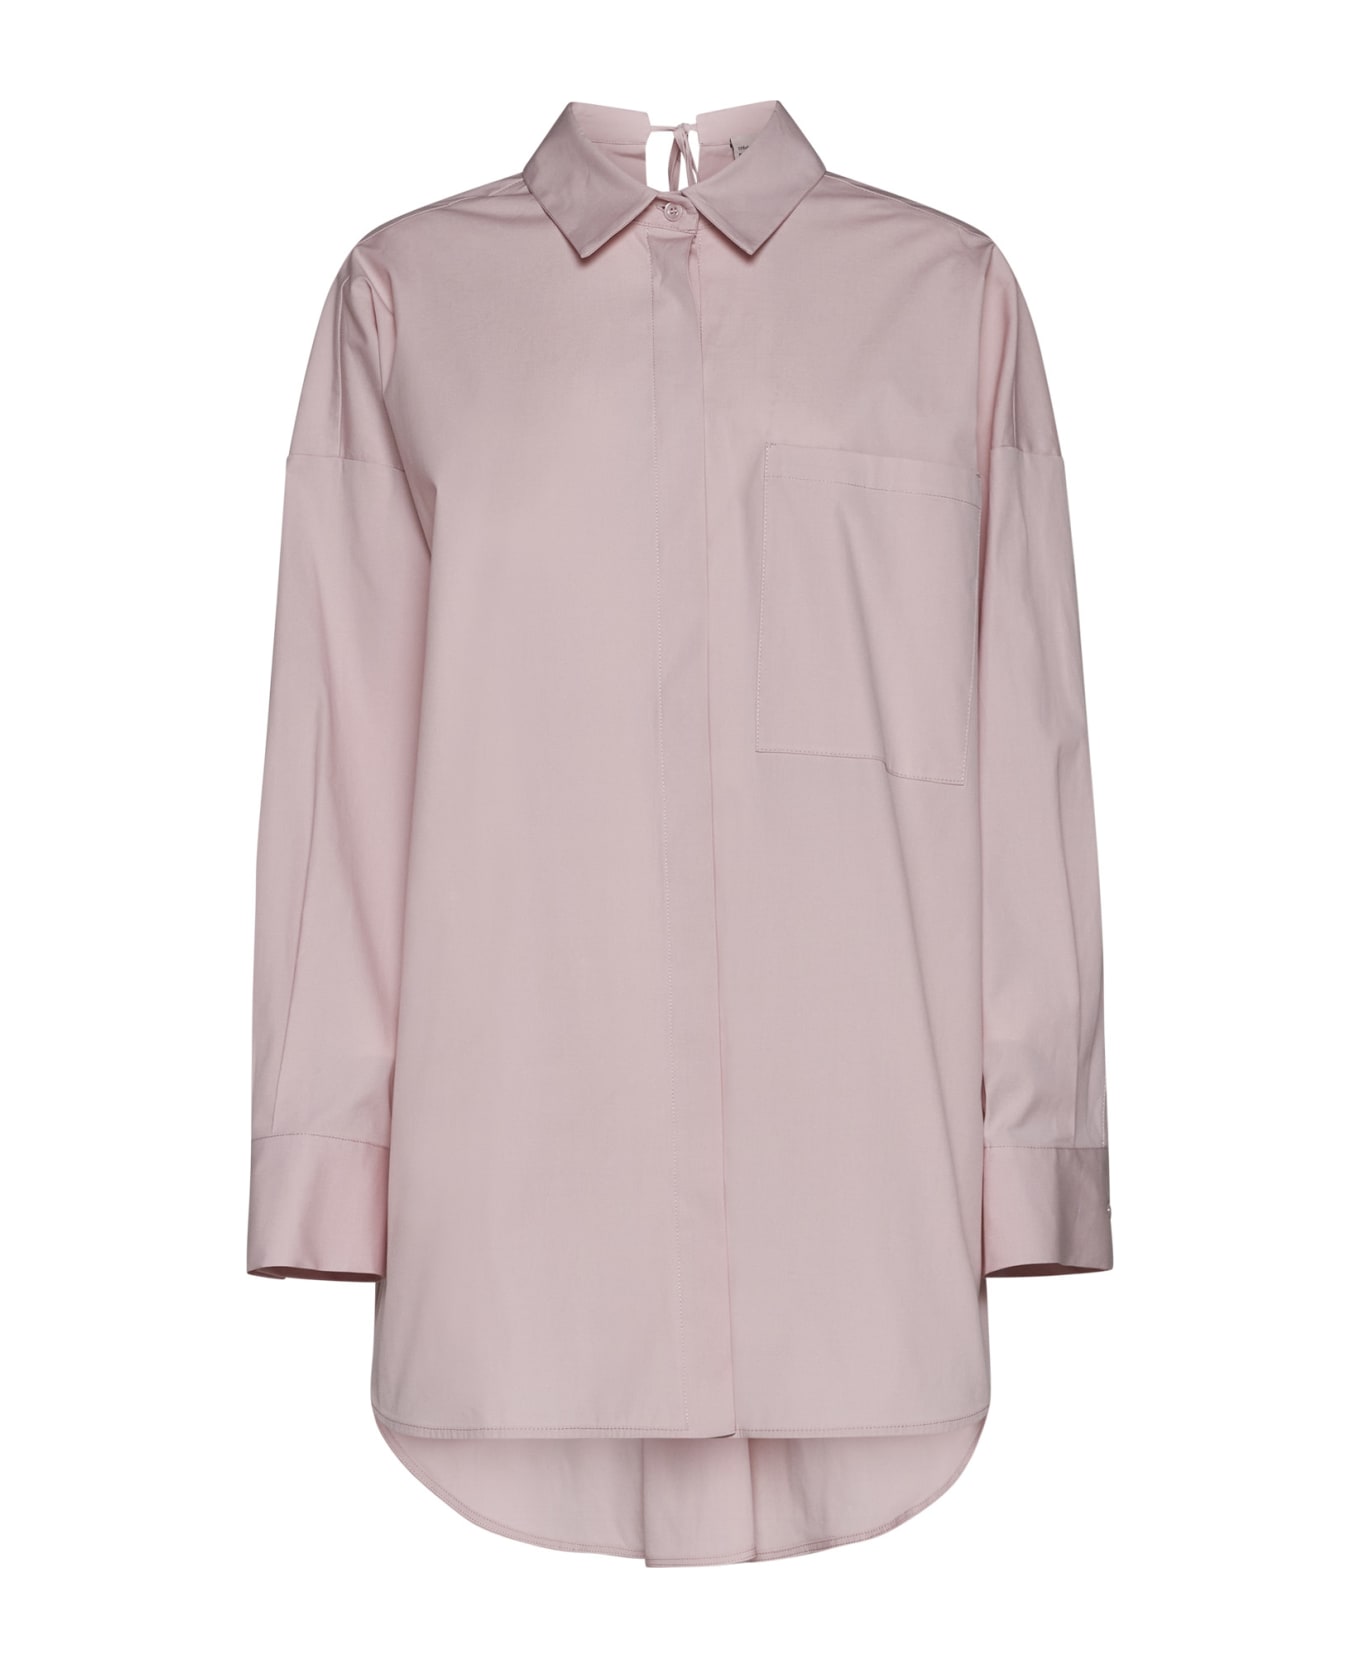 SEMICOUTURE Shirt - Pastel pink